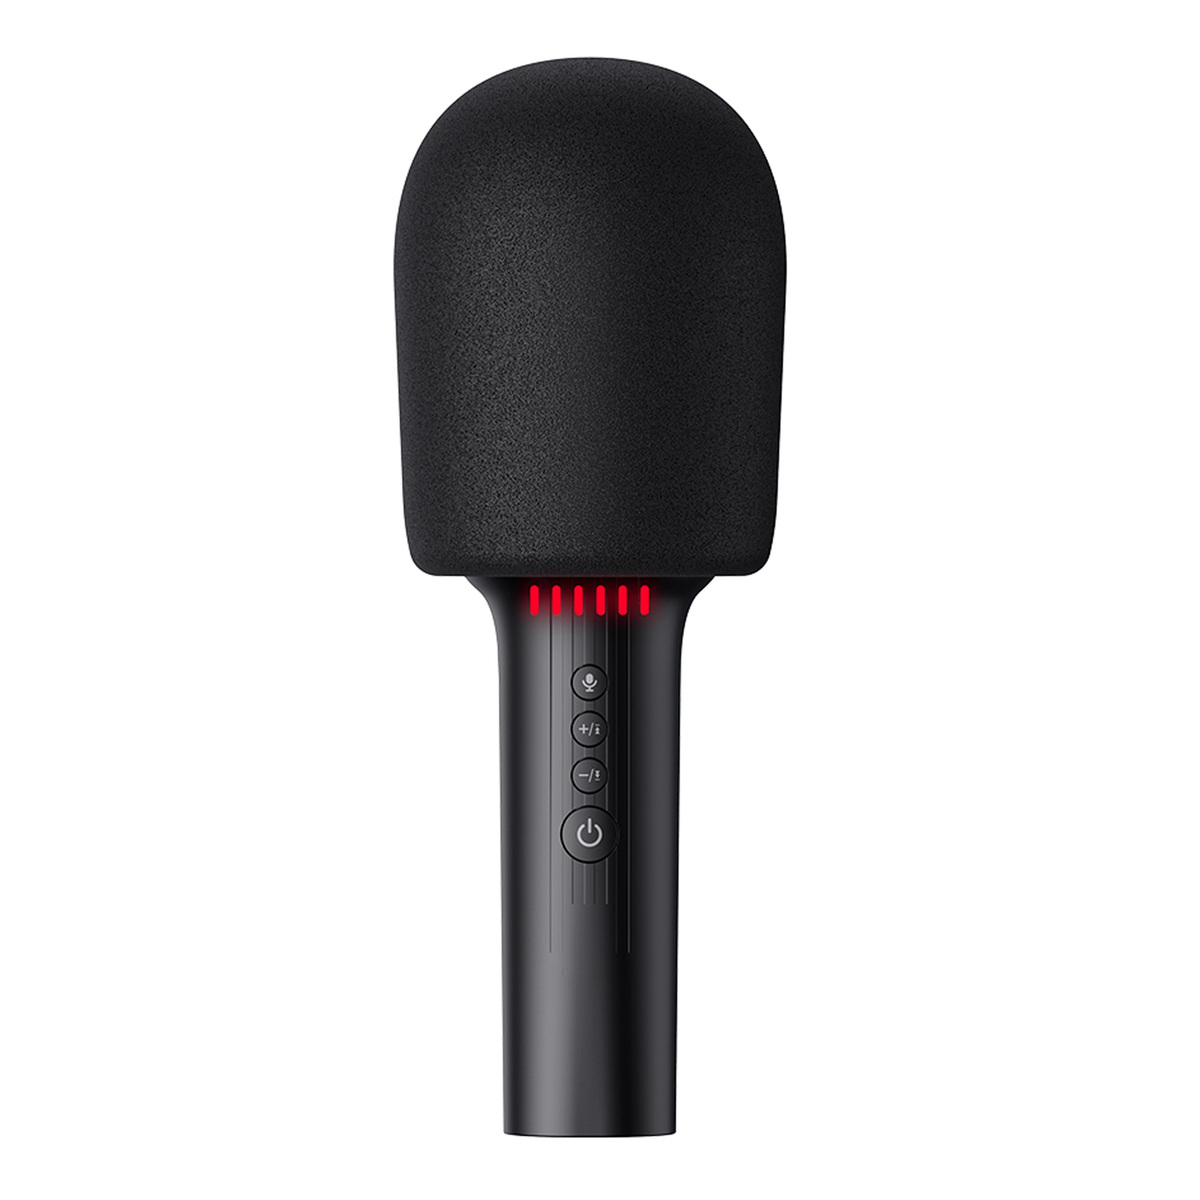 Trands Bluetooth Wireless Karaoke Microphone, Black, KO14